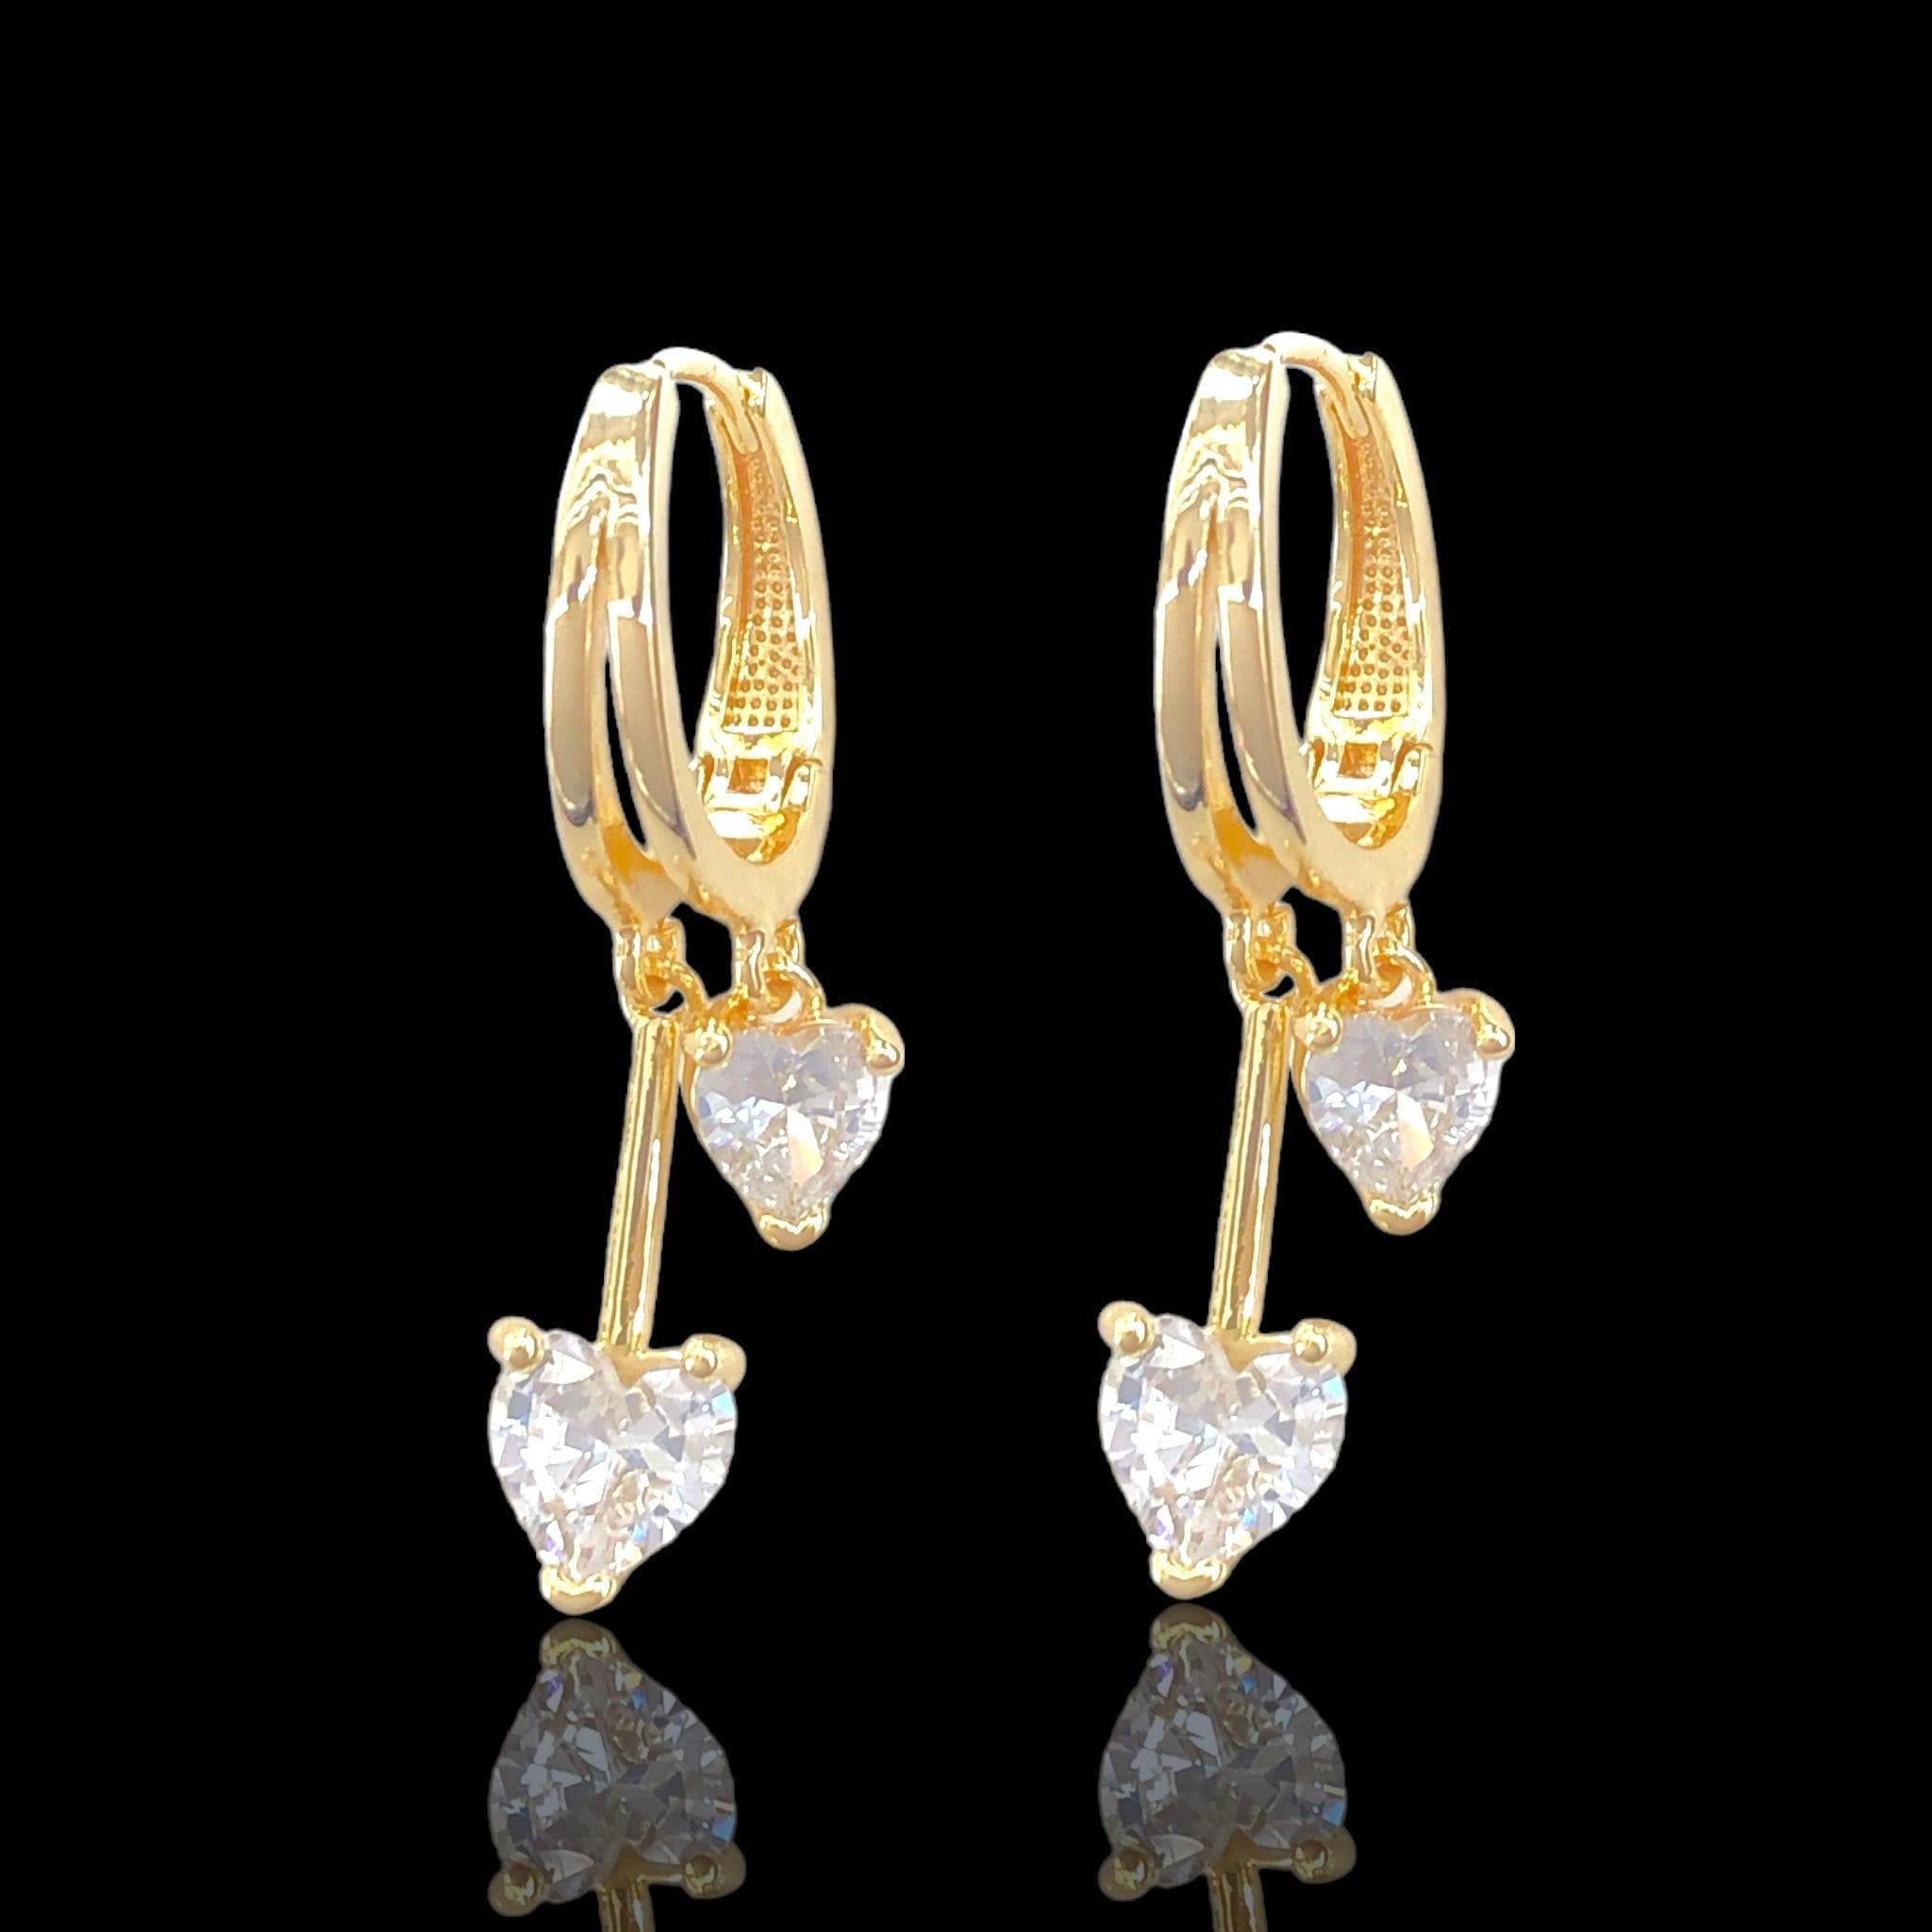 OLE 0638 18K Gold Filled Twin Heart Dangle CZ Earrings- kuania oro laminado